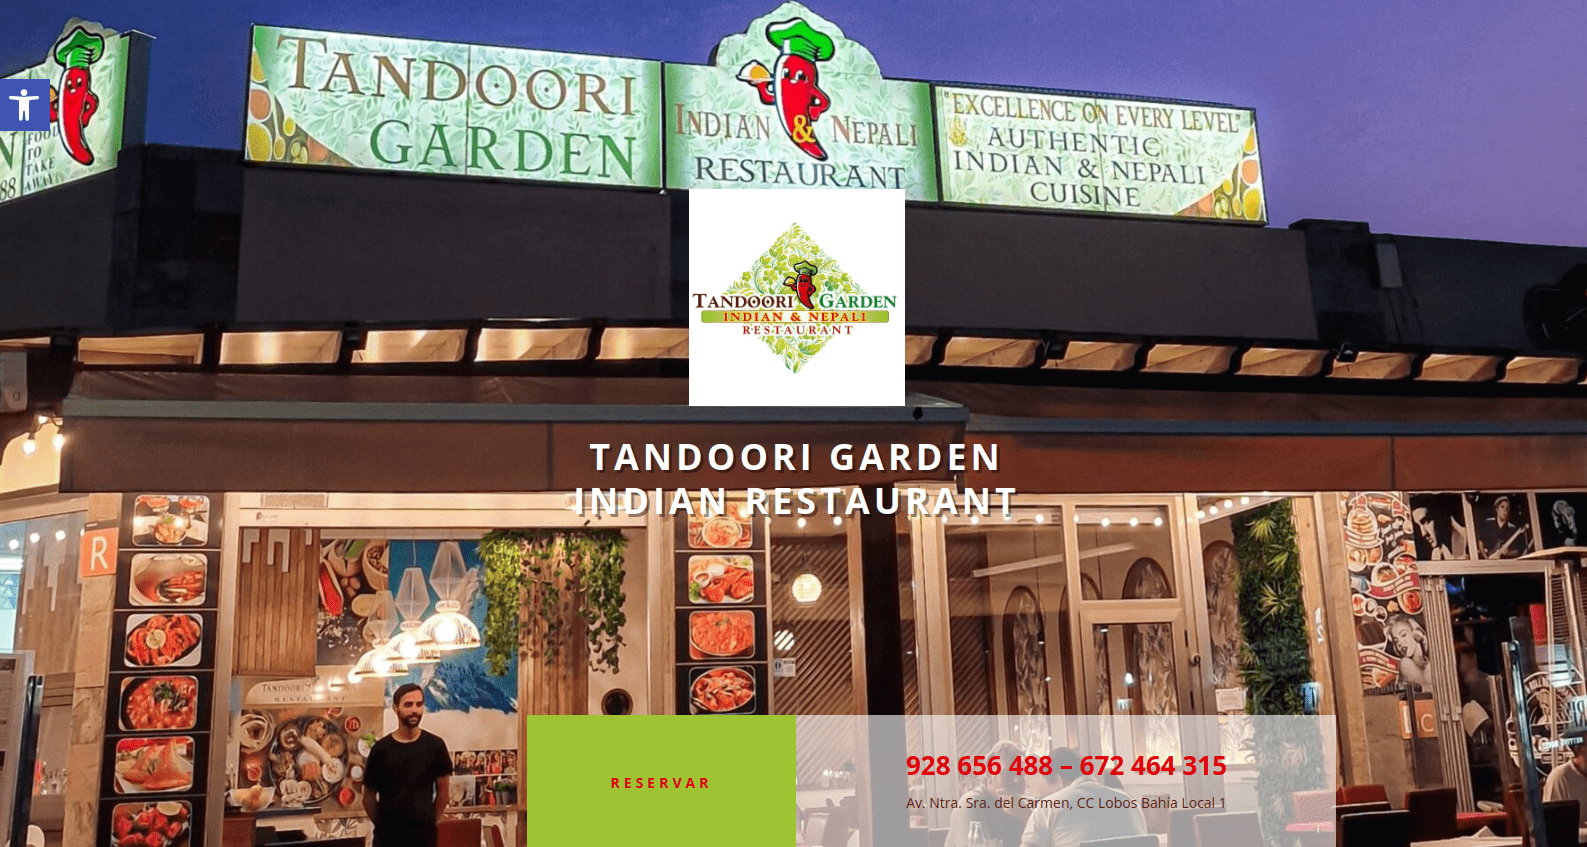 Tandoori Garden Indian Restaurant